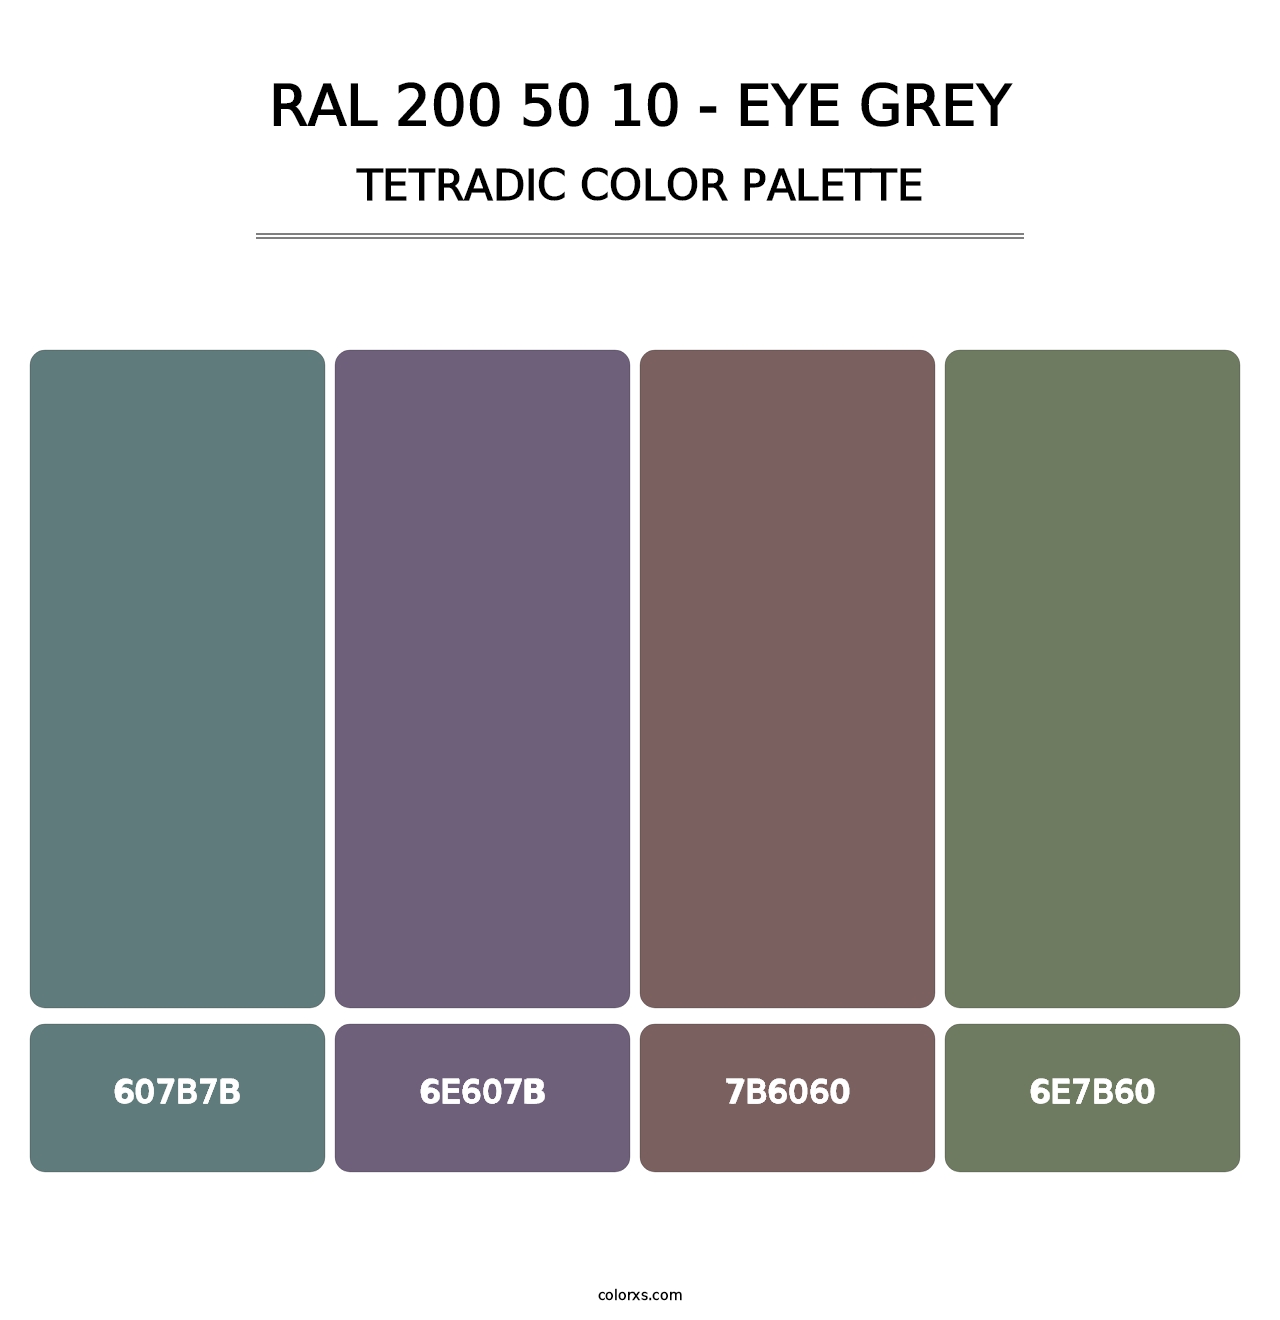 RAL 200 50 10 - Eye Grey - Tetradic Color Palette